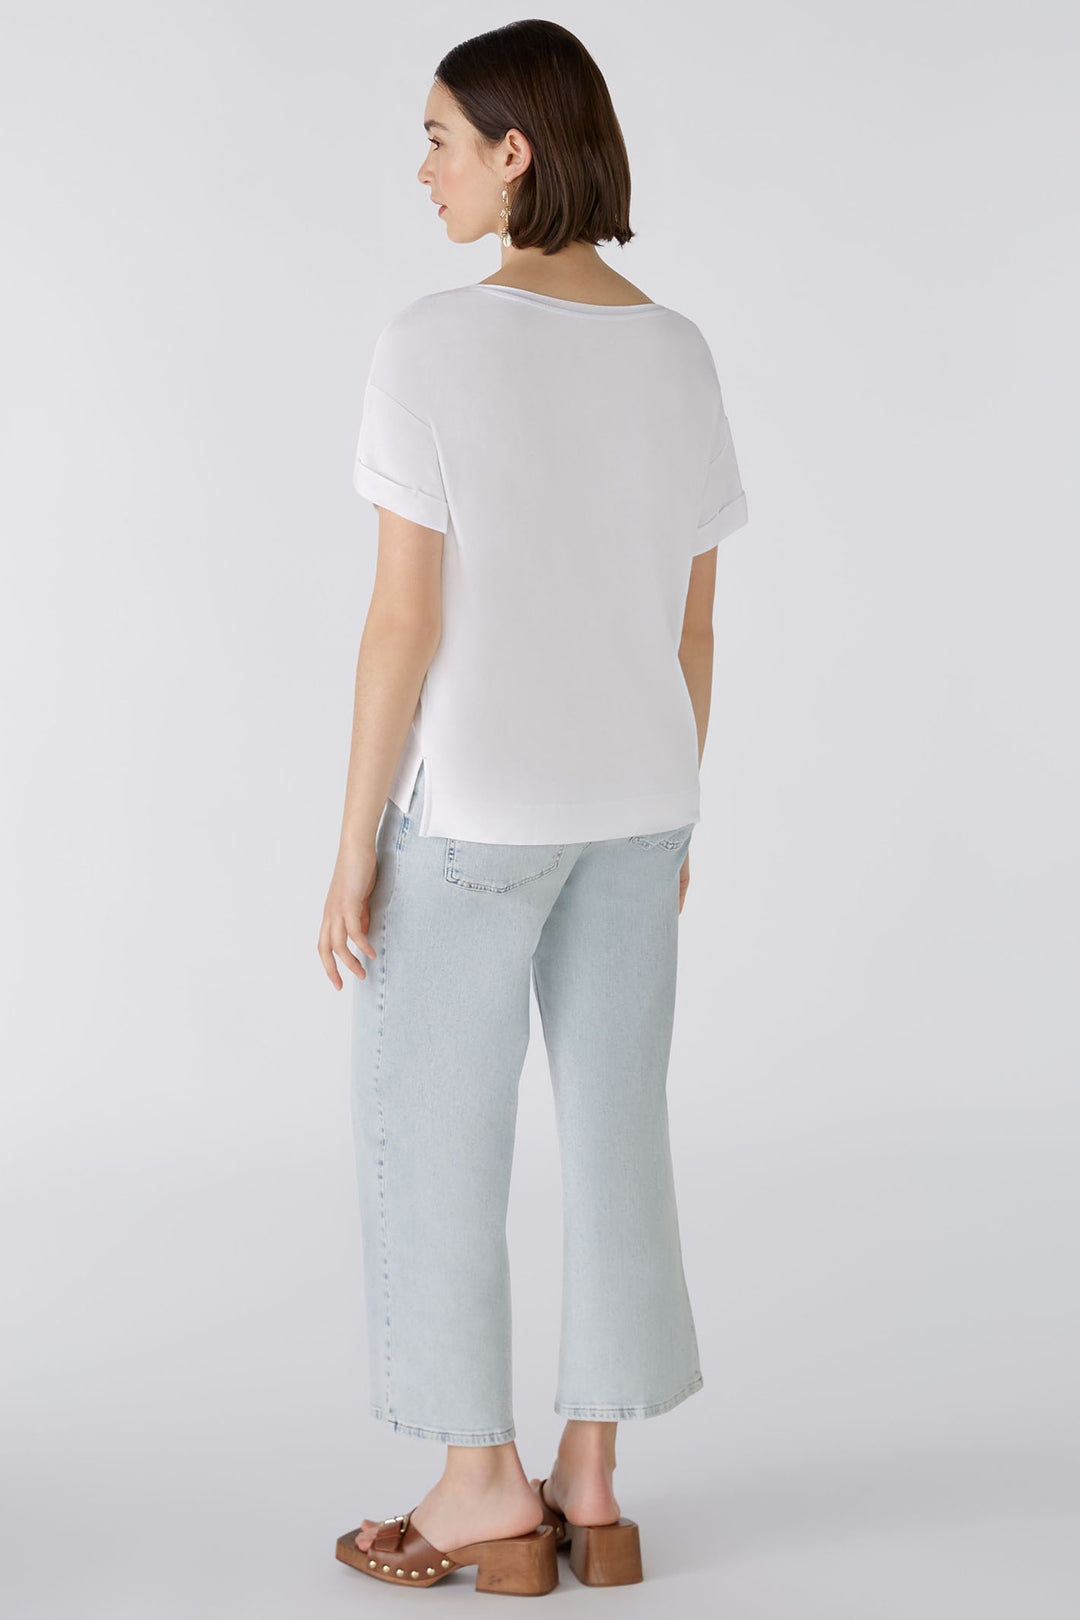 Oui 87384 Optic White Blue Fashionista Motif T-Shirt - Olivia Grace Fashion